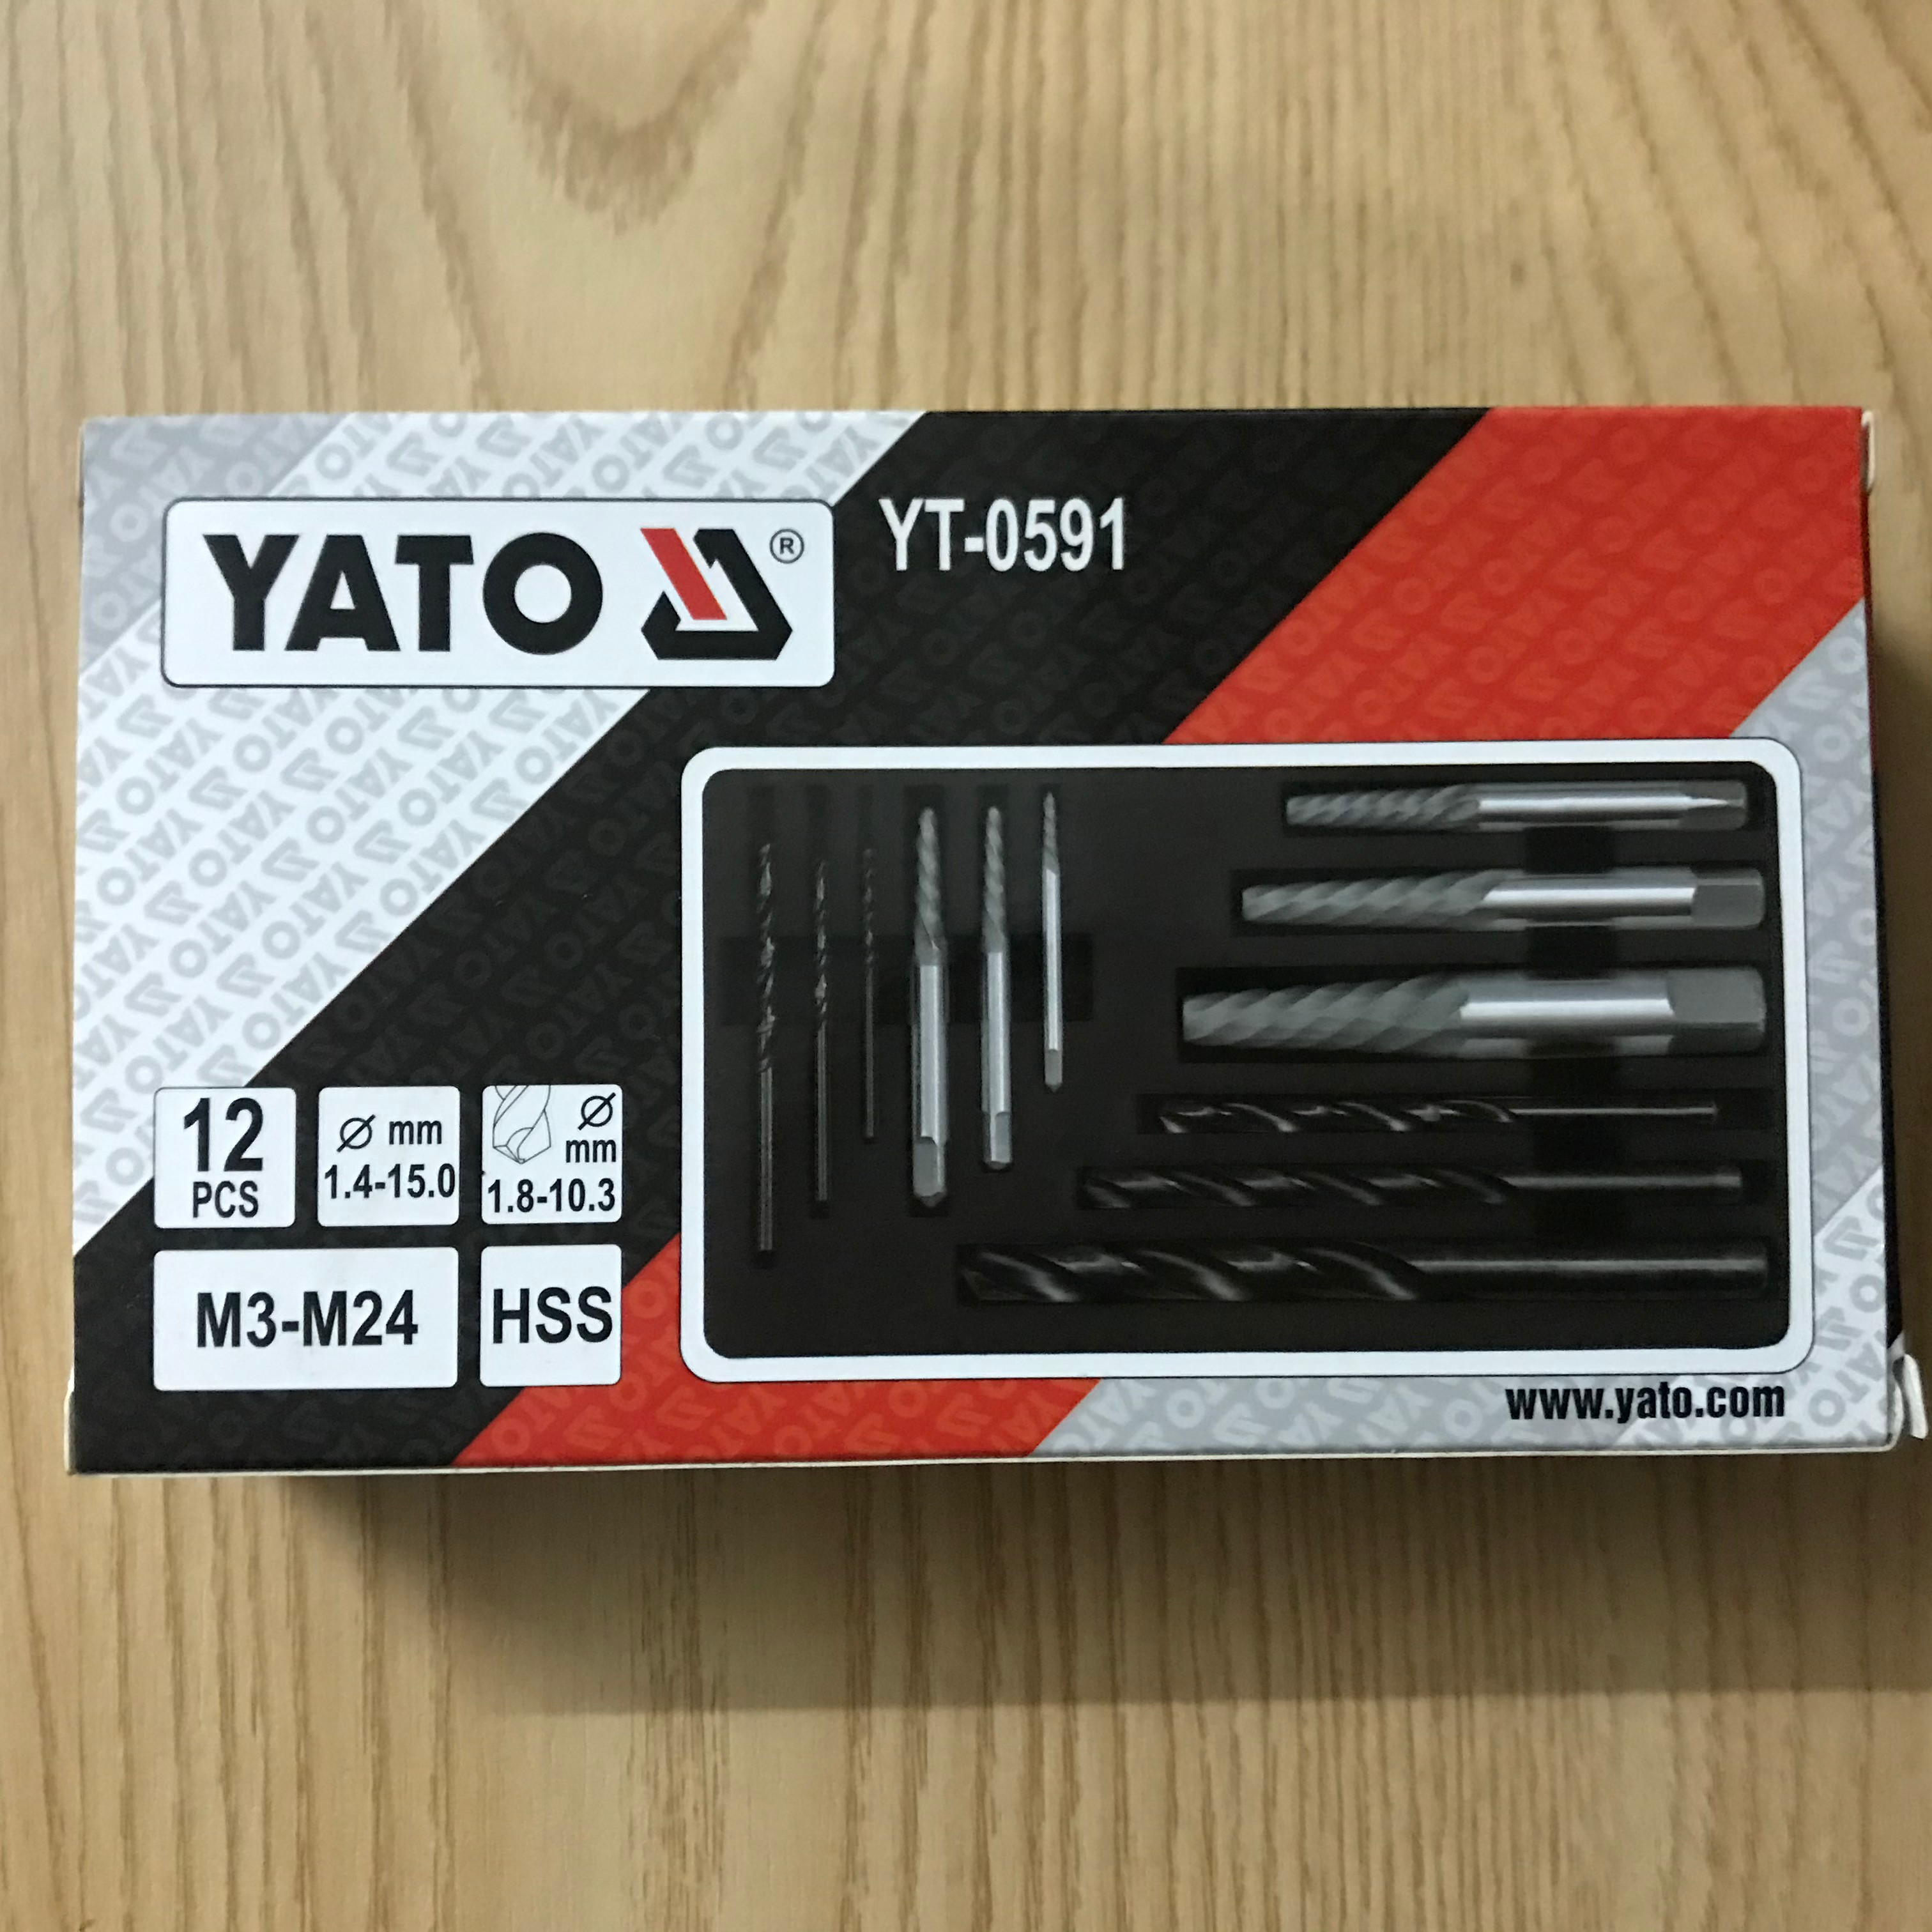 Khoan Nhổ Ốc Gãy Yato YT-0591